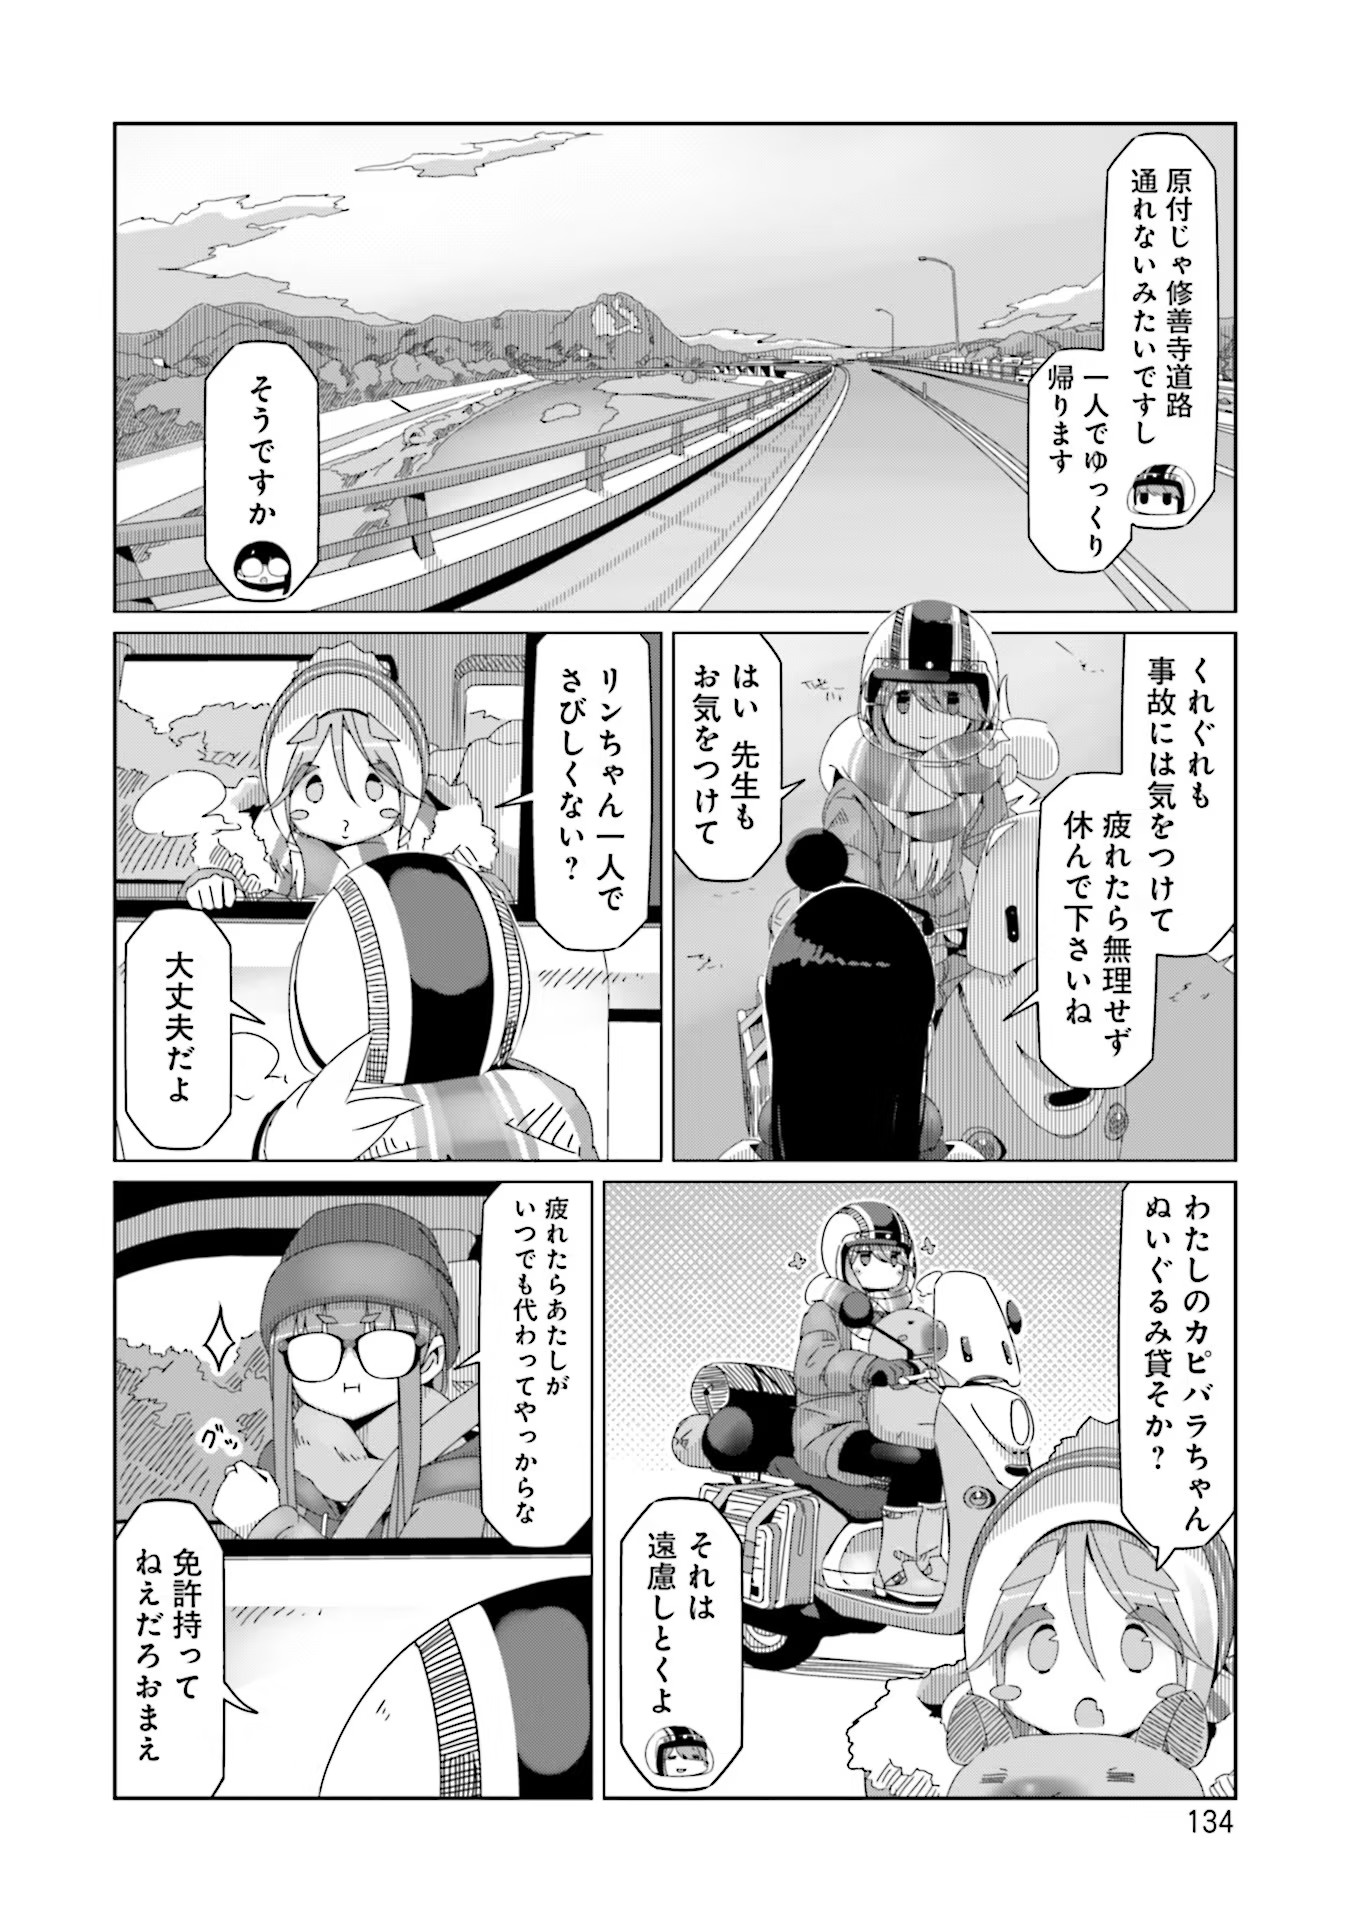 Yuru Camp - Chapter 52 - Page 2